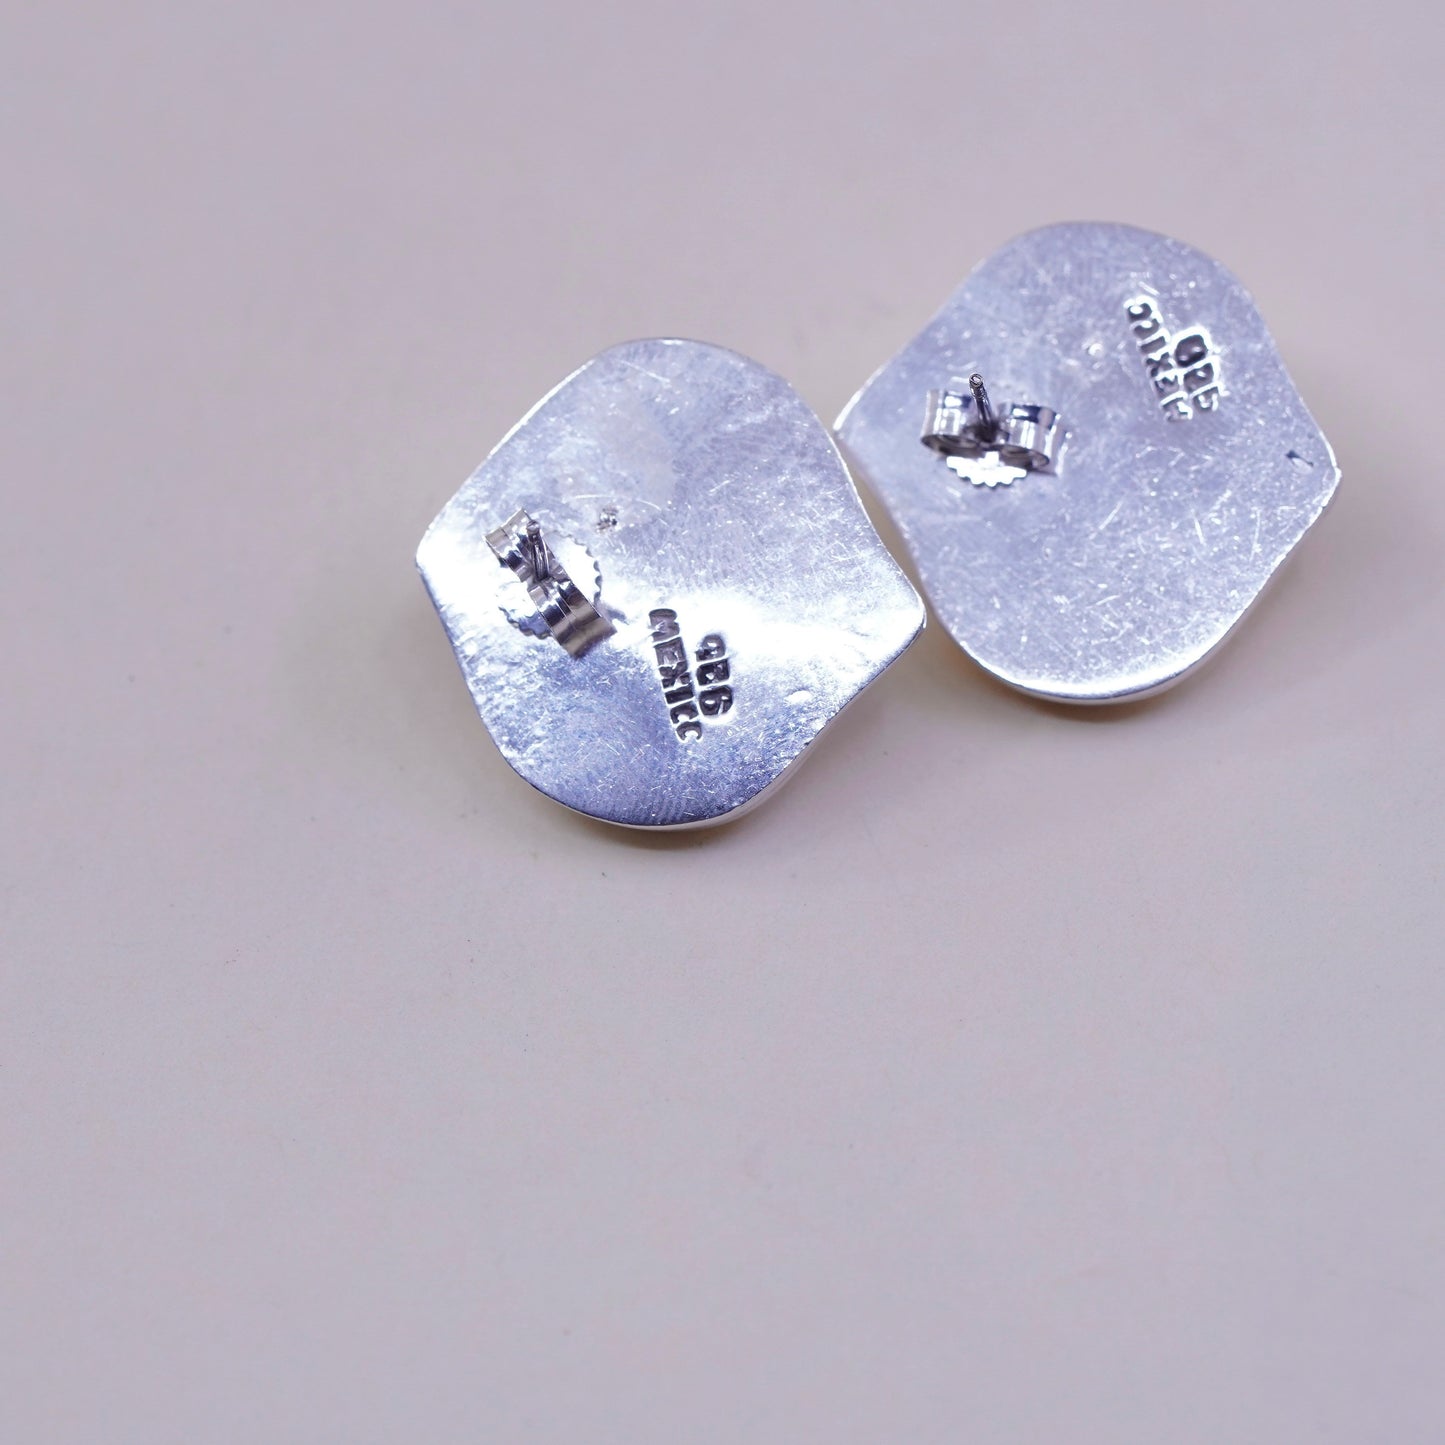 Vintage Sterling silver handmade earrings, solid 925 Ribbed origami studs